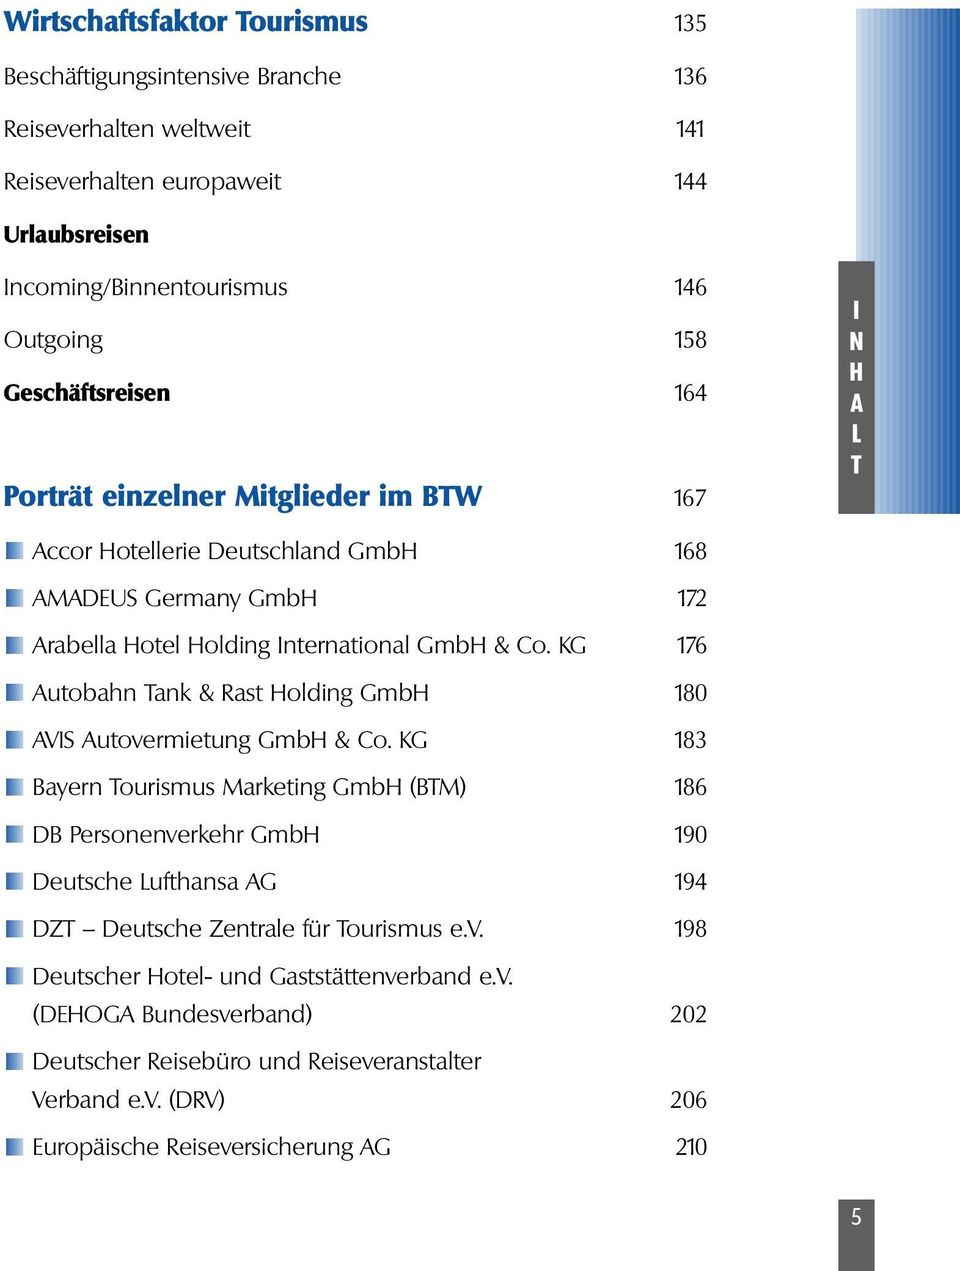 KG 176 utobahn ank & ast Holding GmbH 180 V utovermietung GmbH & Co.